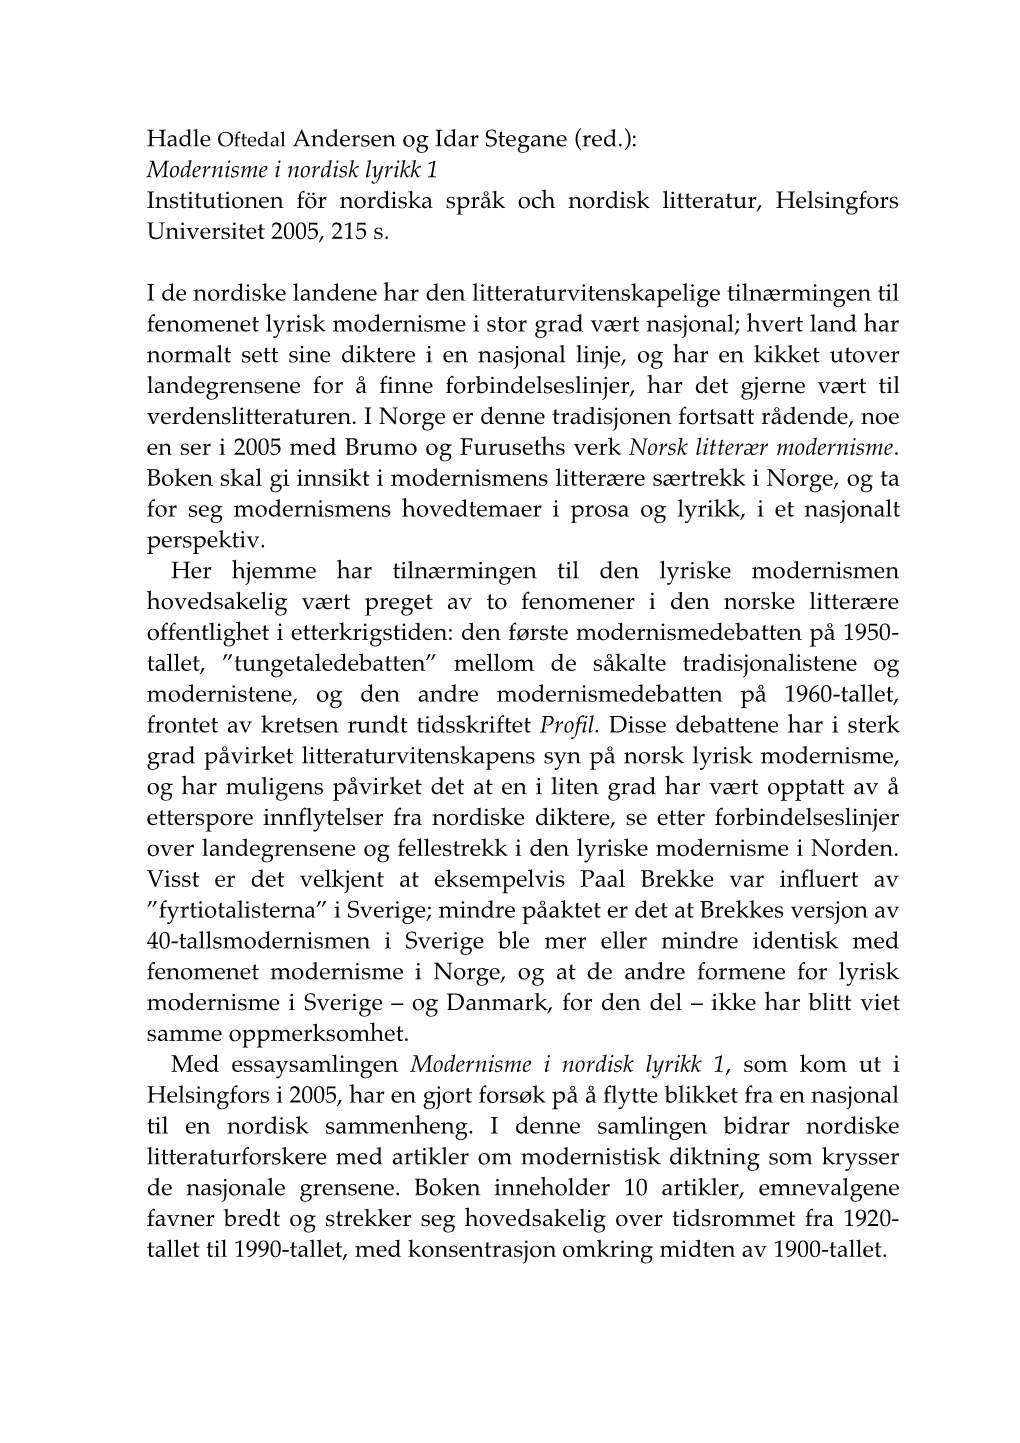 Hadle Oftedal Andersen Og Idar Stegane (Red.): Modernisme I